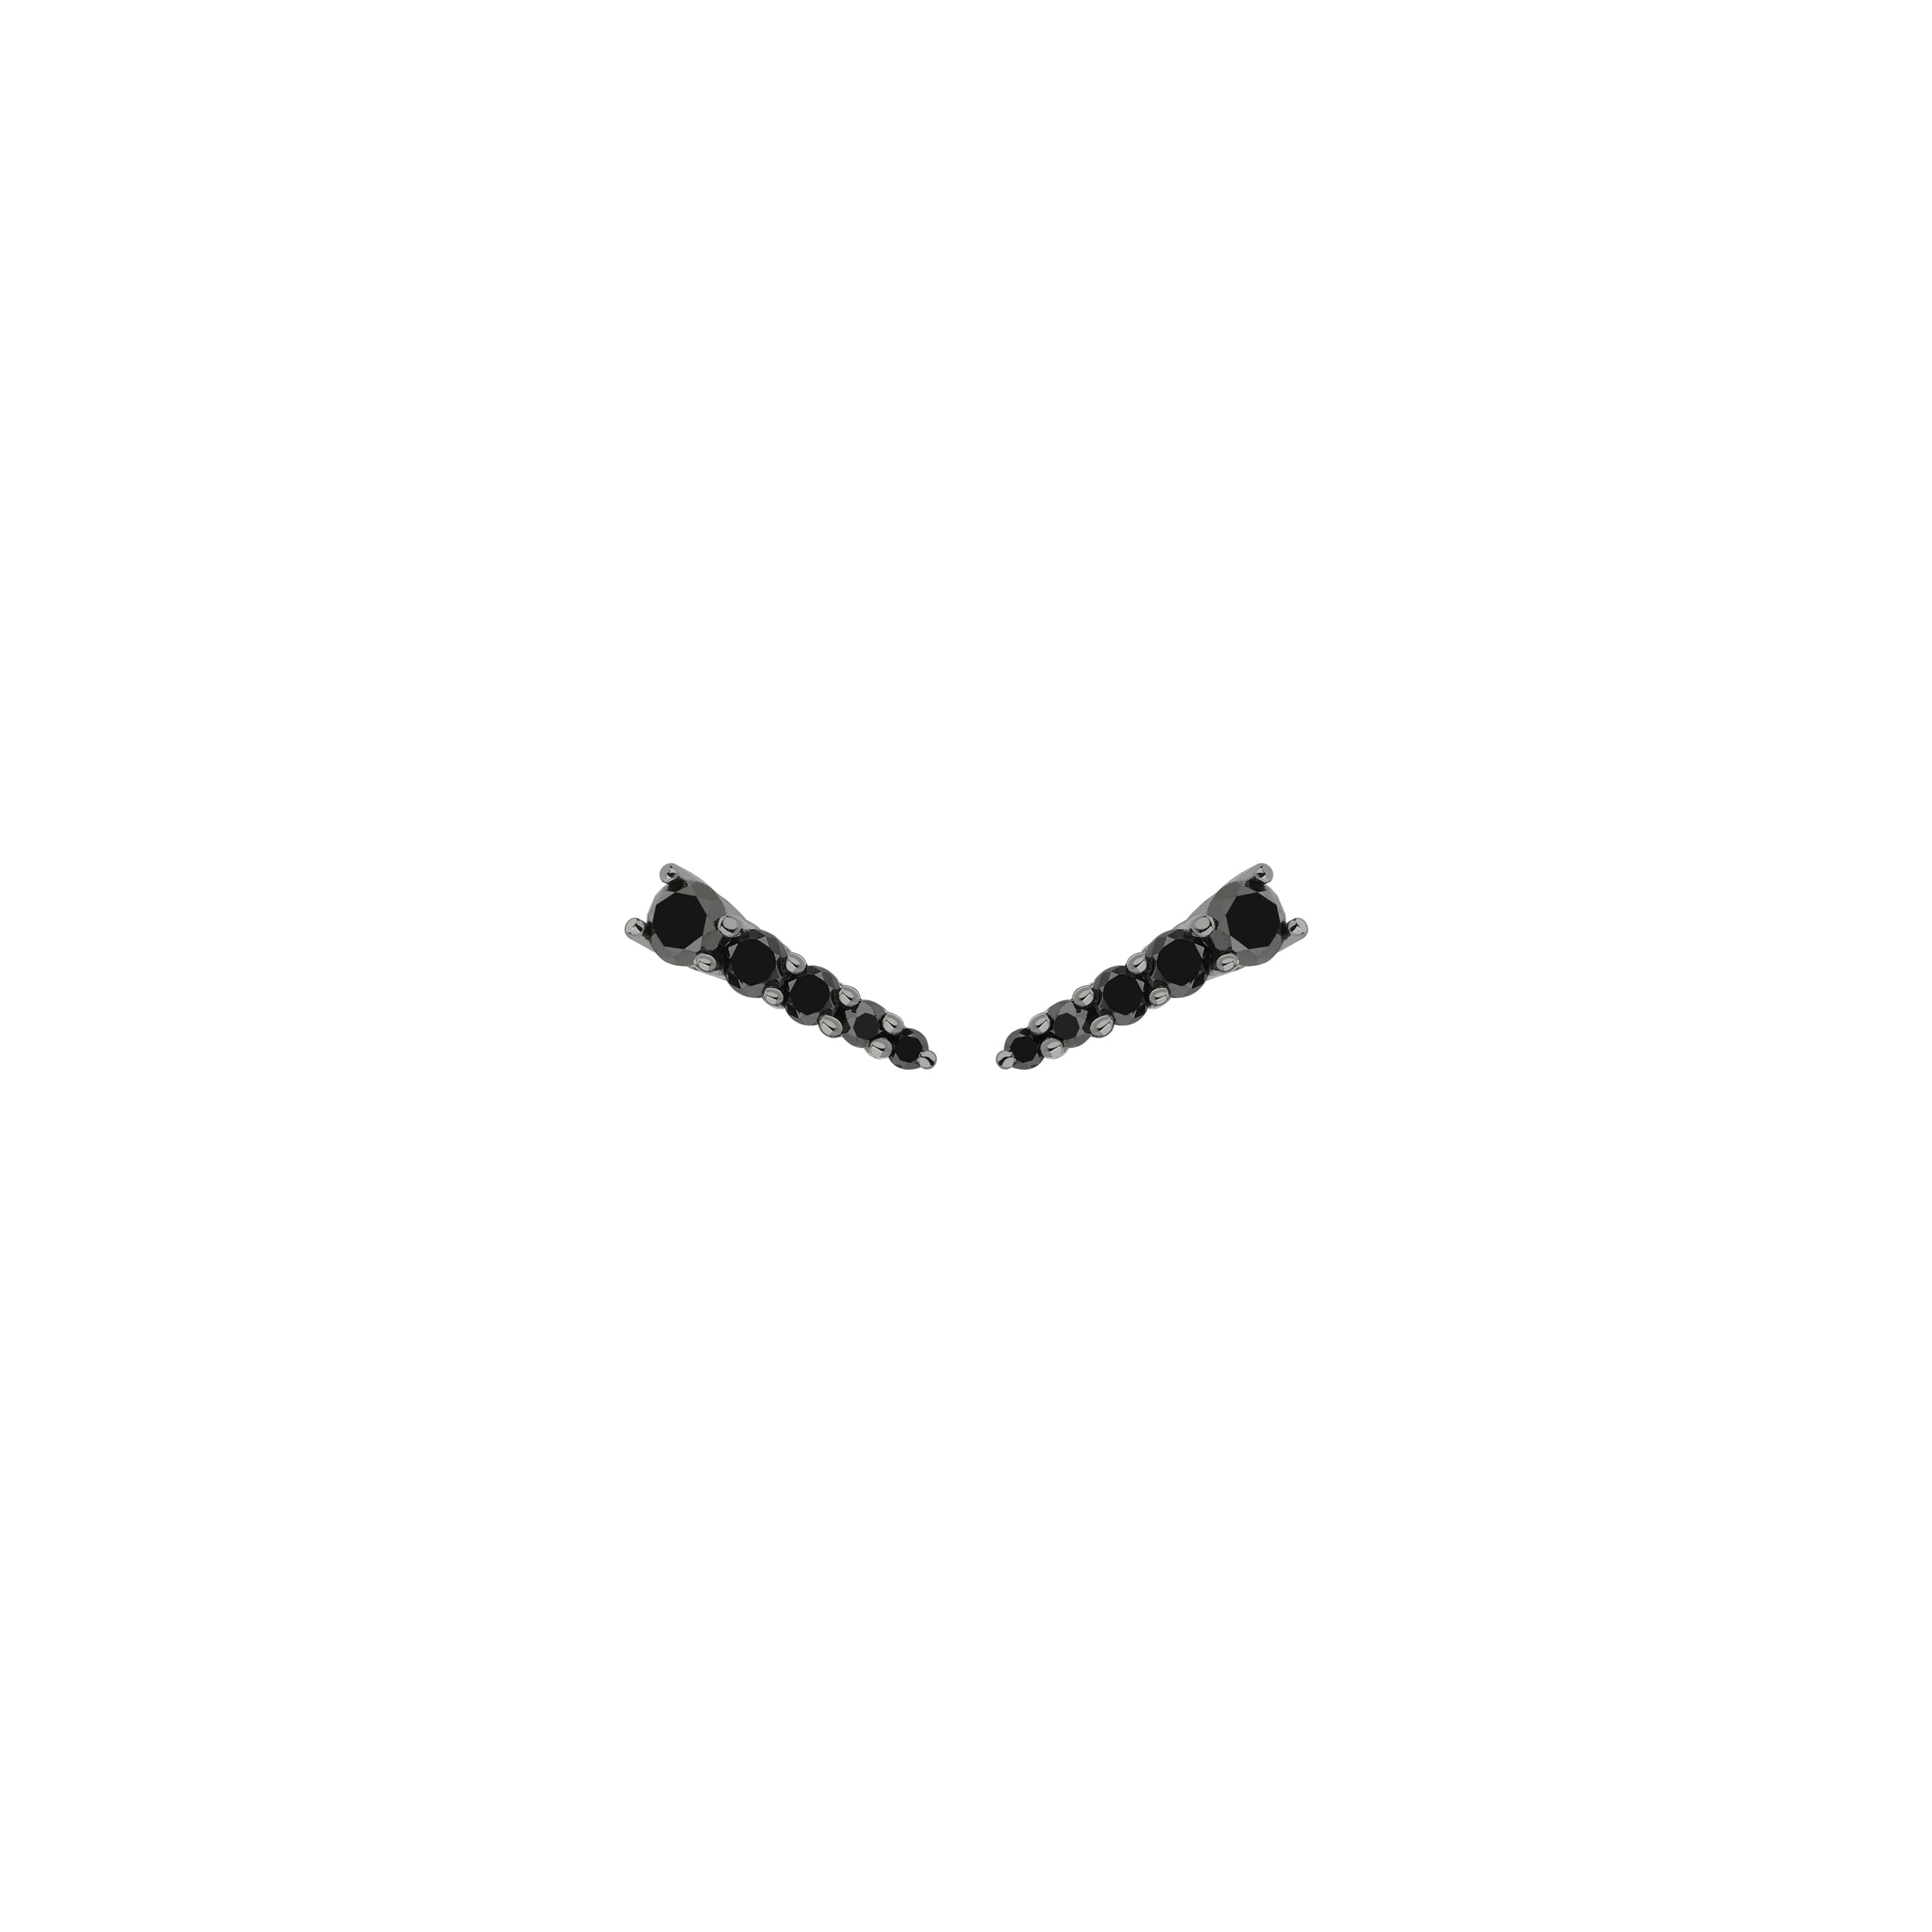 Brinco Ear Cuff Rock Star - P | Ouro Branco 18K com Ródio Negro e Diamantes Negros